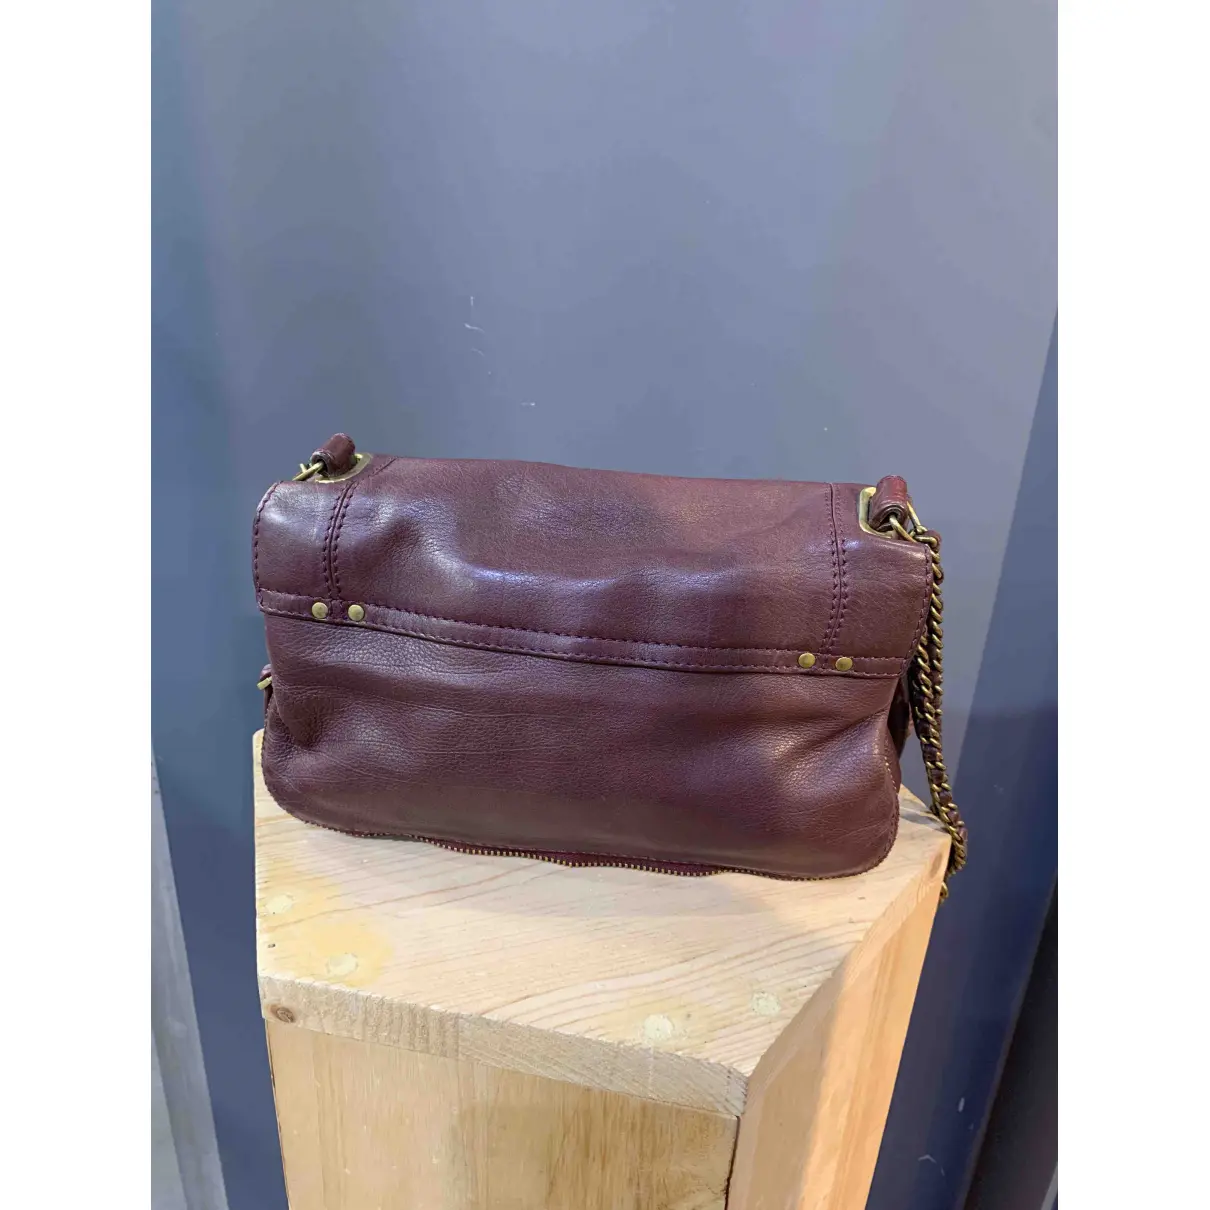 Buy Jerome Dreyfuss Bobi leather crossbody bag online